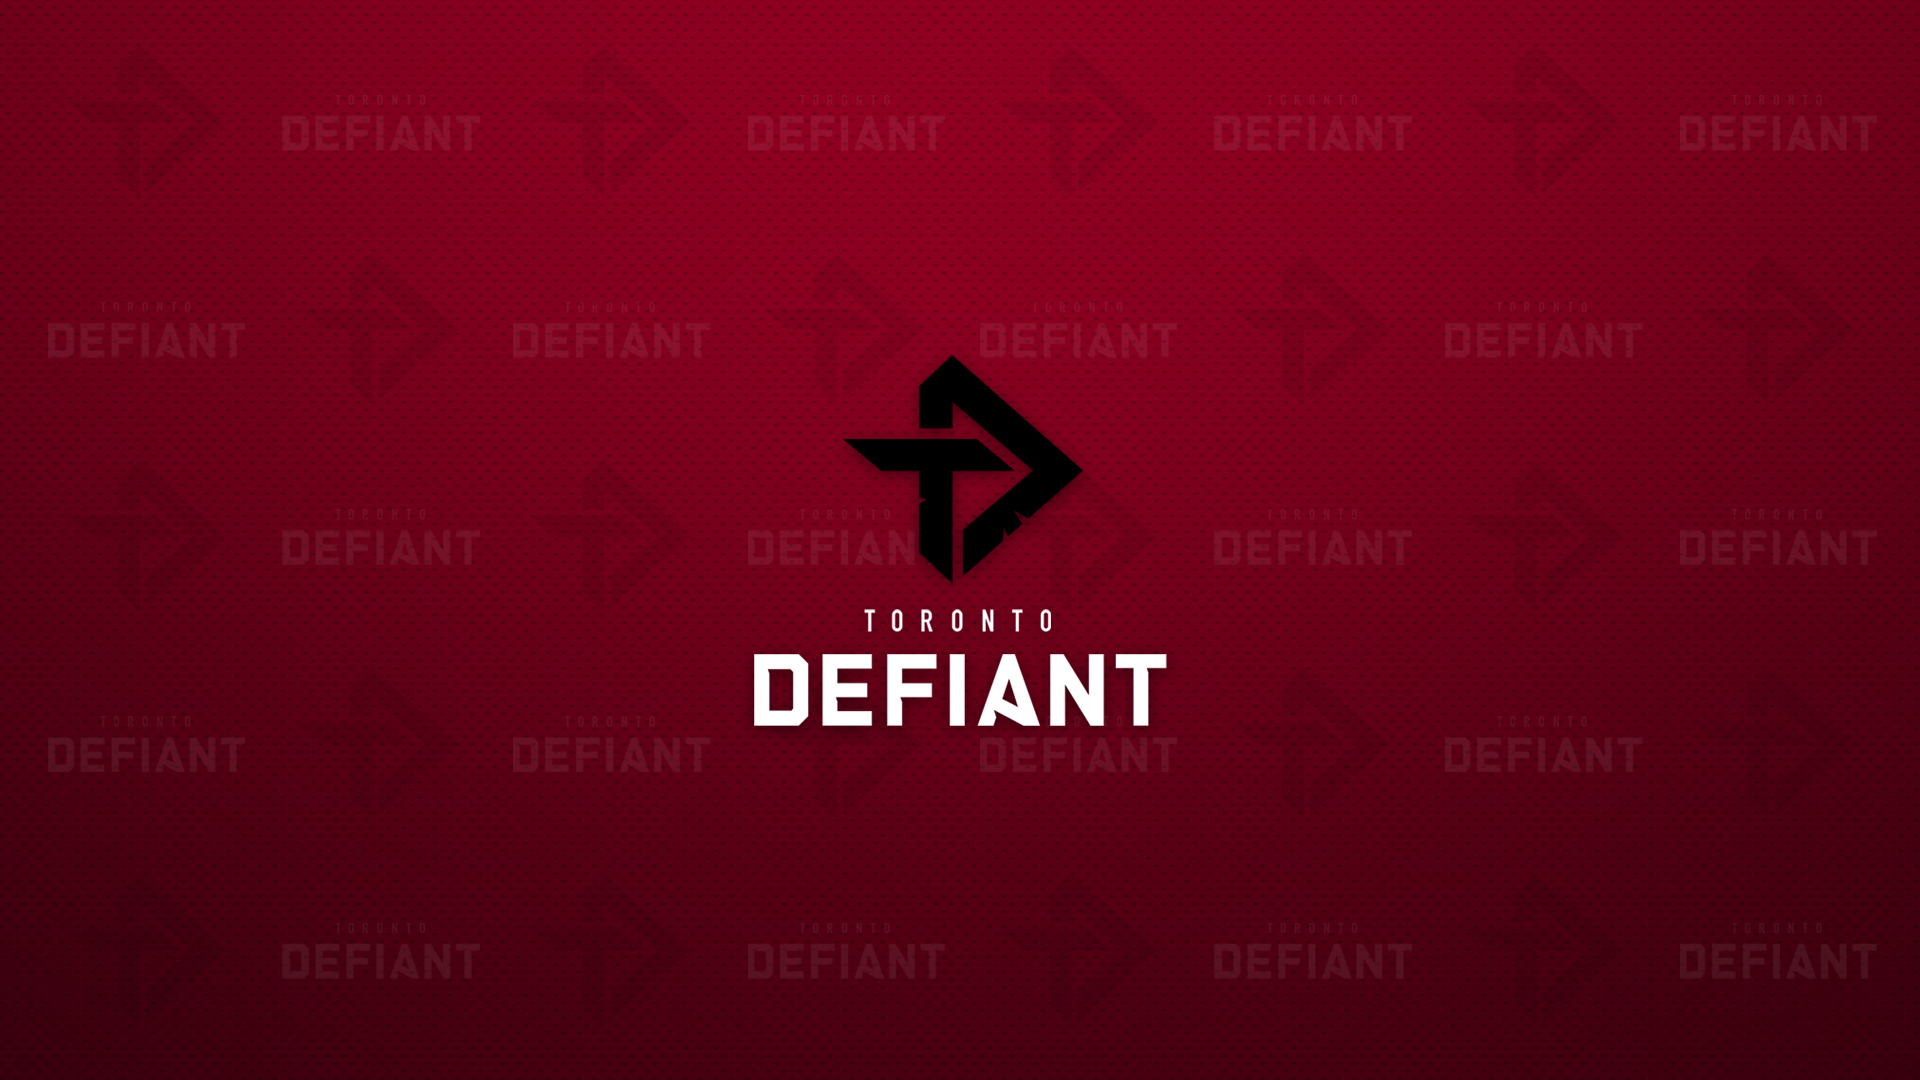 Toronto Defiant Desktop and Mobile Wallpaper (Black and Red)